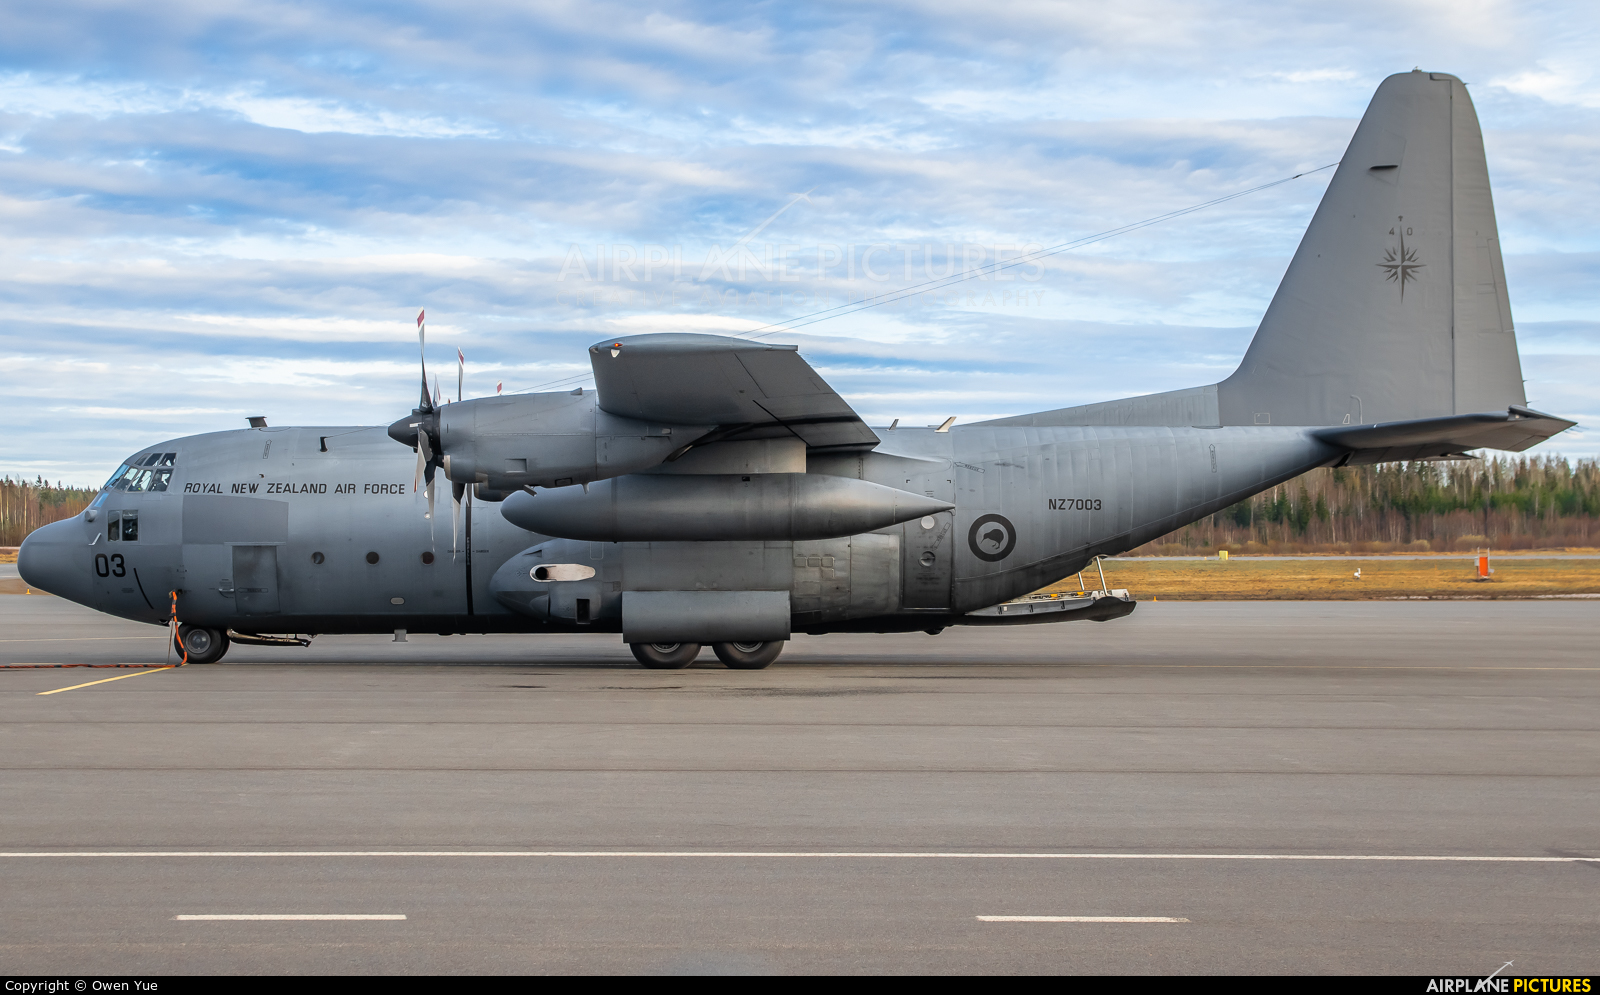 New Zealand - Air Force NZ7003 aircraft at Tampere-Pirkkala